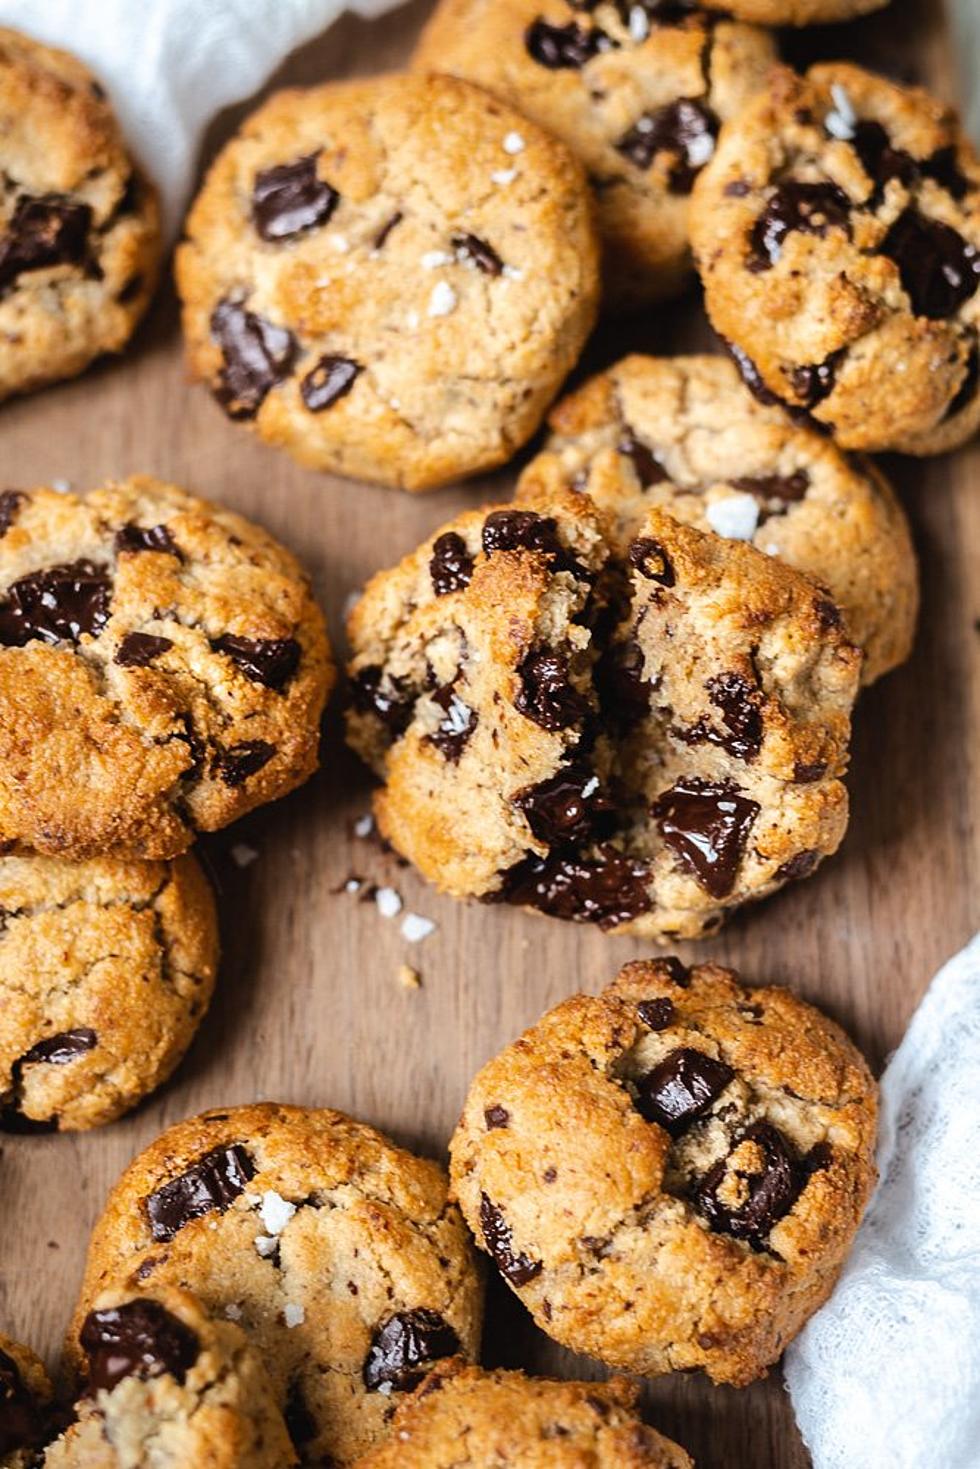 Happy Passover! Make These Gluten-Free Vegan Flourless Chocolate Chip Cookies